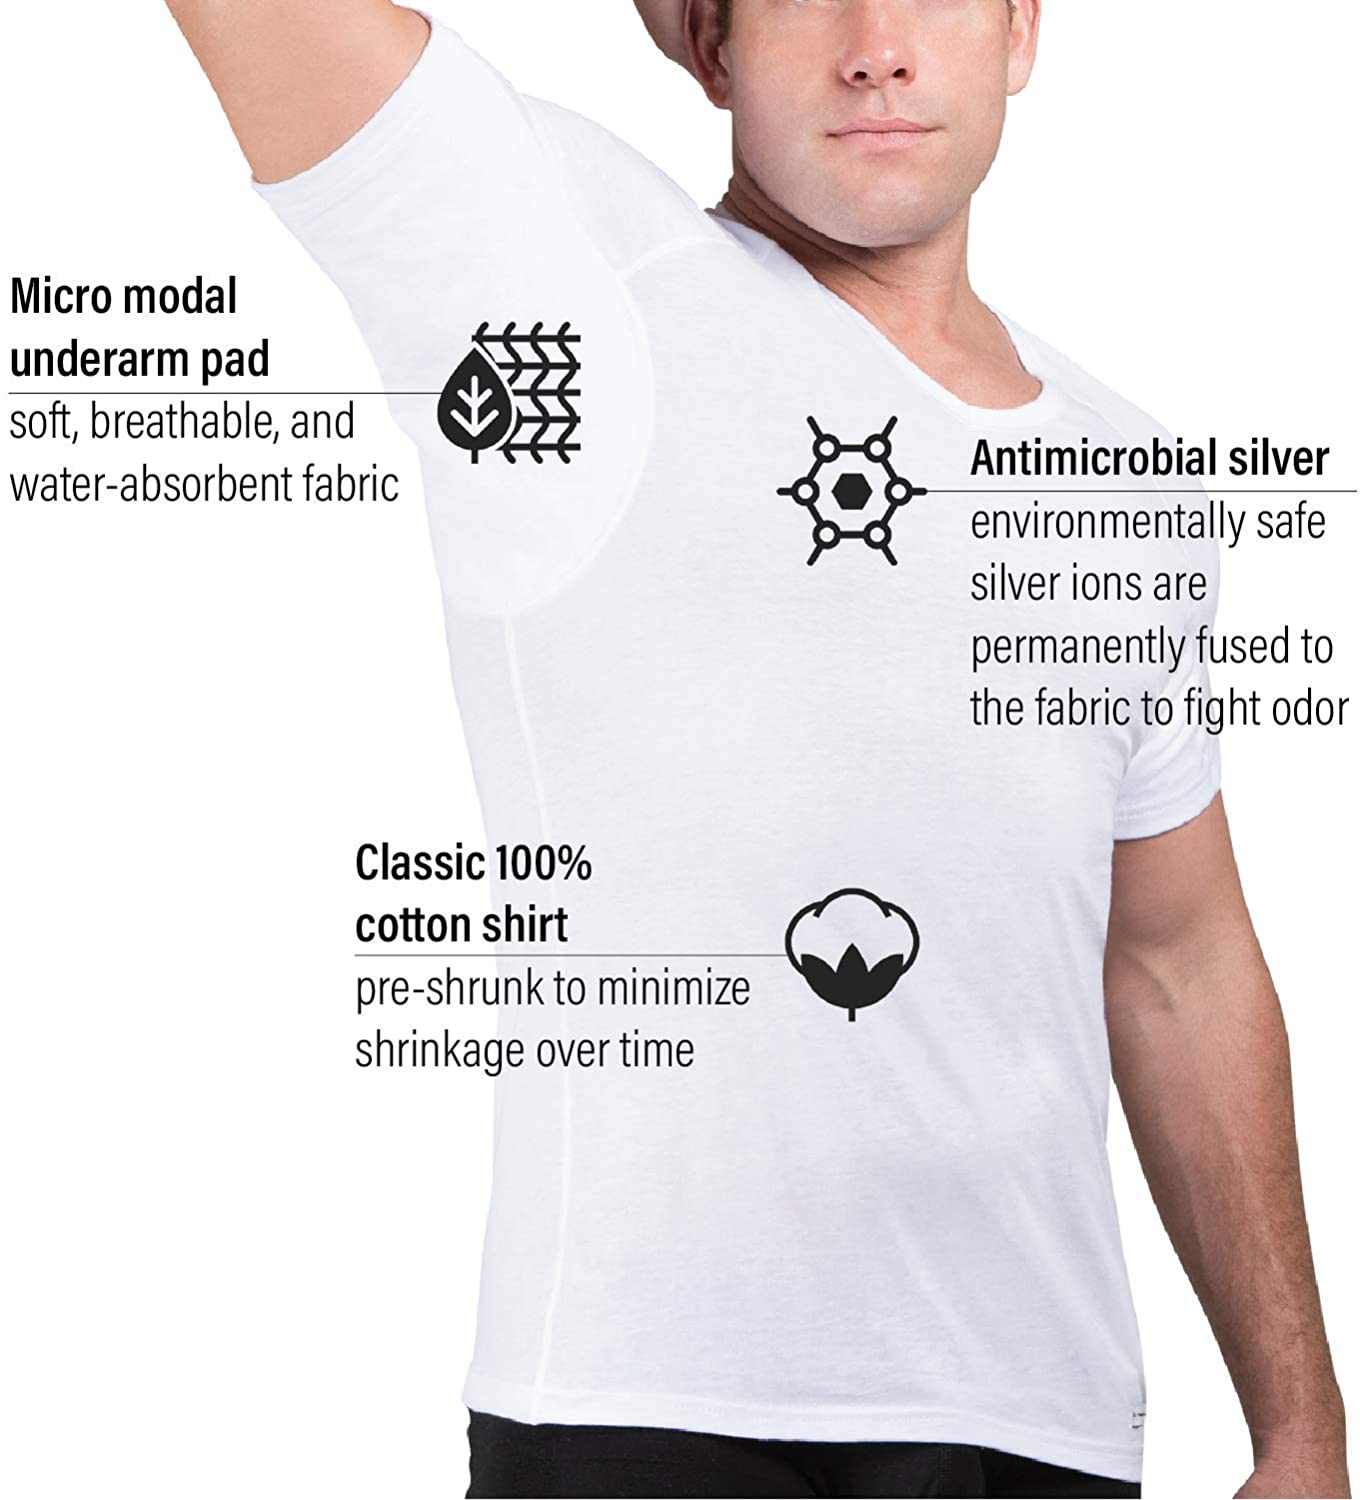 Enerup custom cotton sweatproof t-shirt mens sweat proof undershirt with underarm pads slim v-neck t shirt